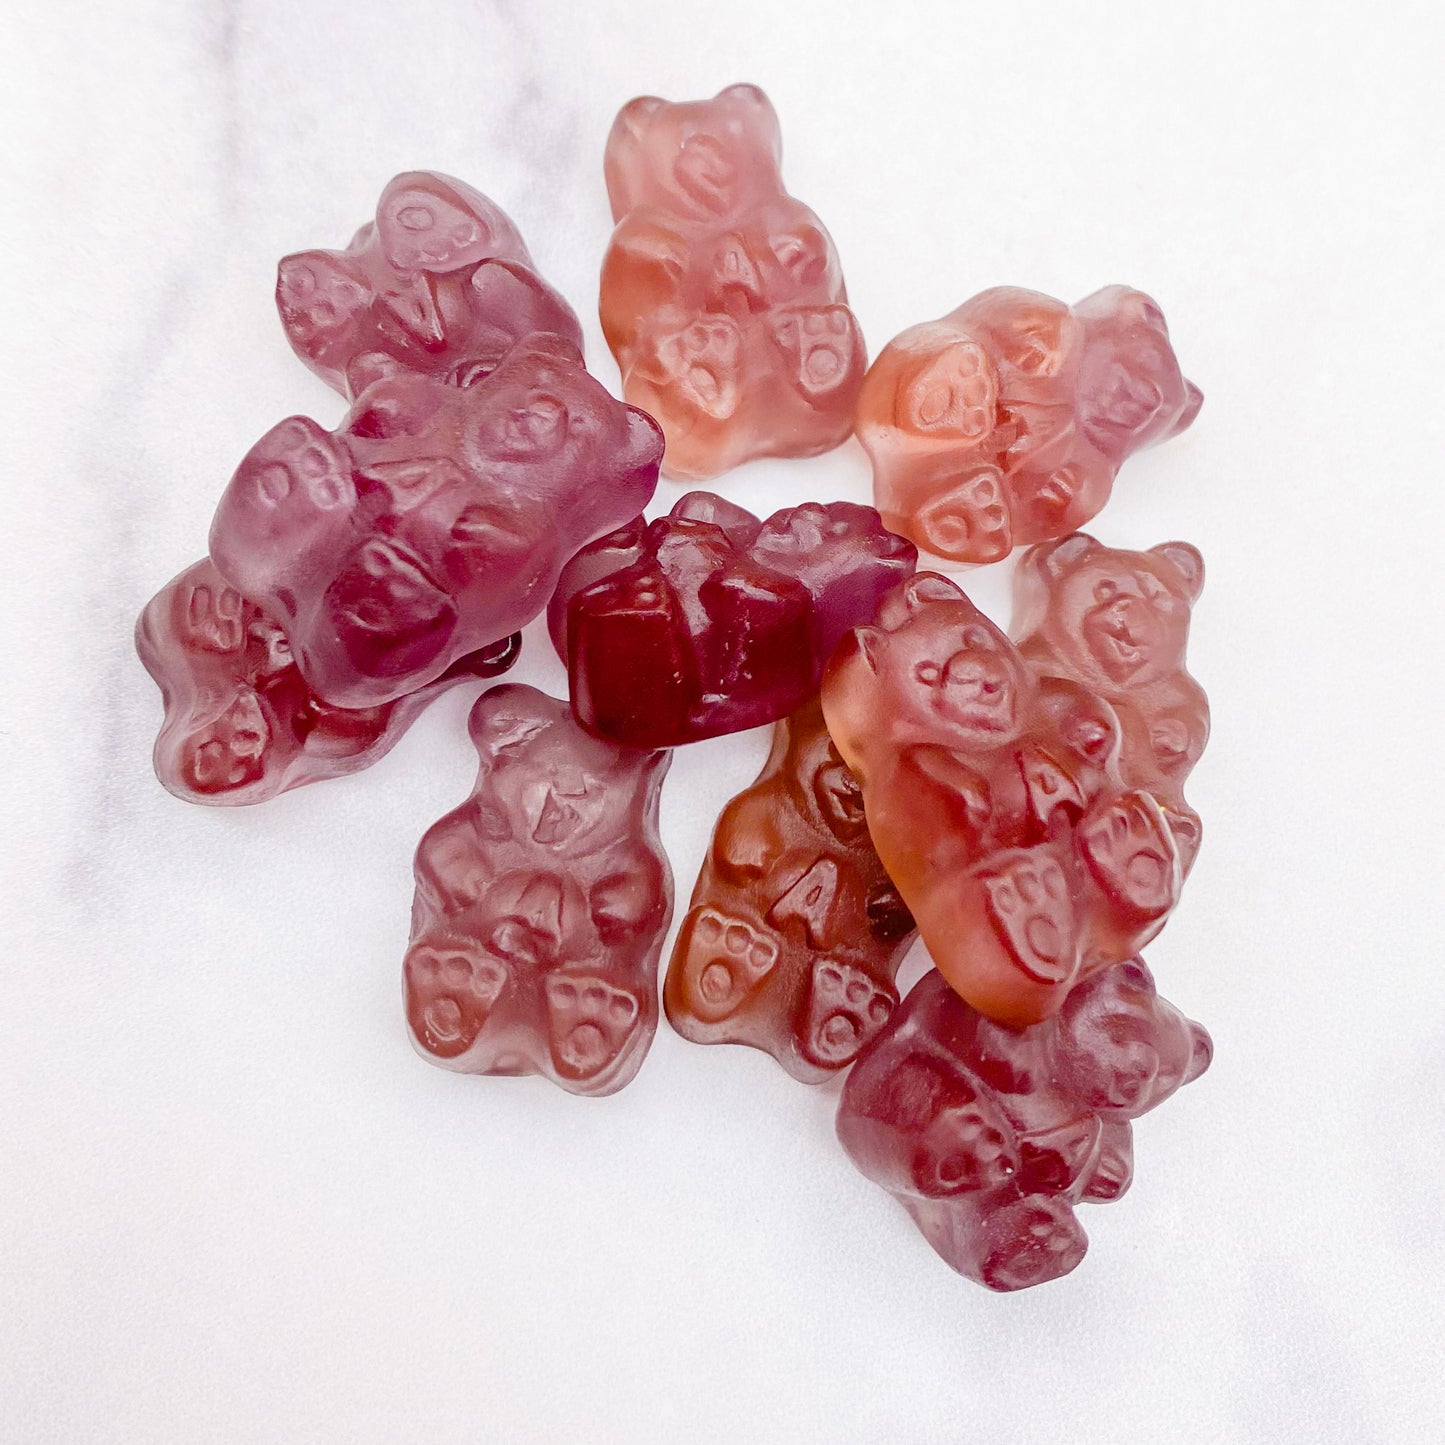 Gummi Bears - Grape